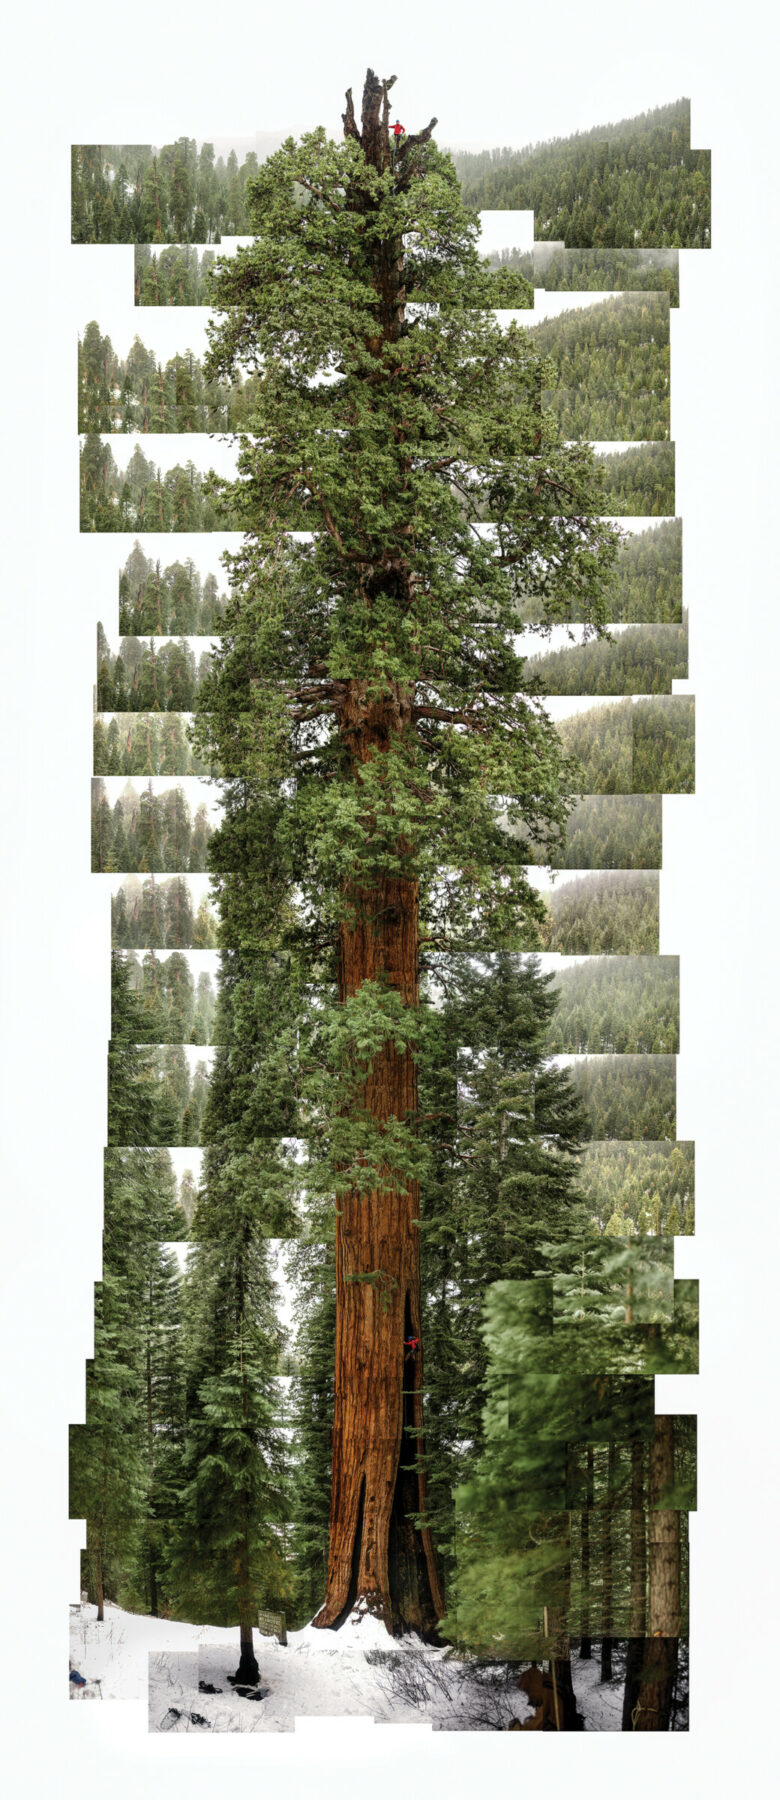 James Balog, Giant Sequoia, “Stagg,” Camp Nelson, California, USA, December 28, 2001.